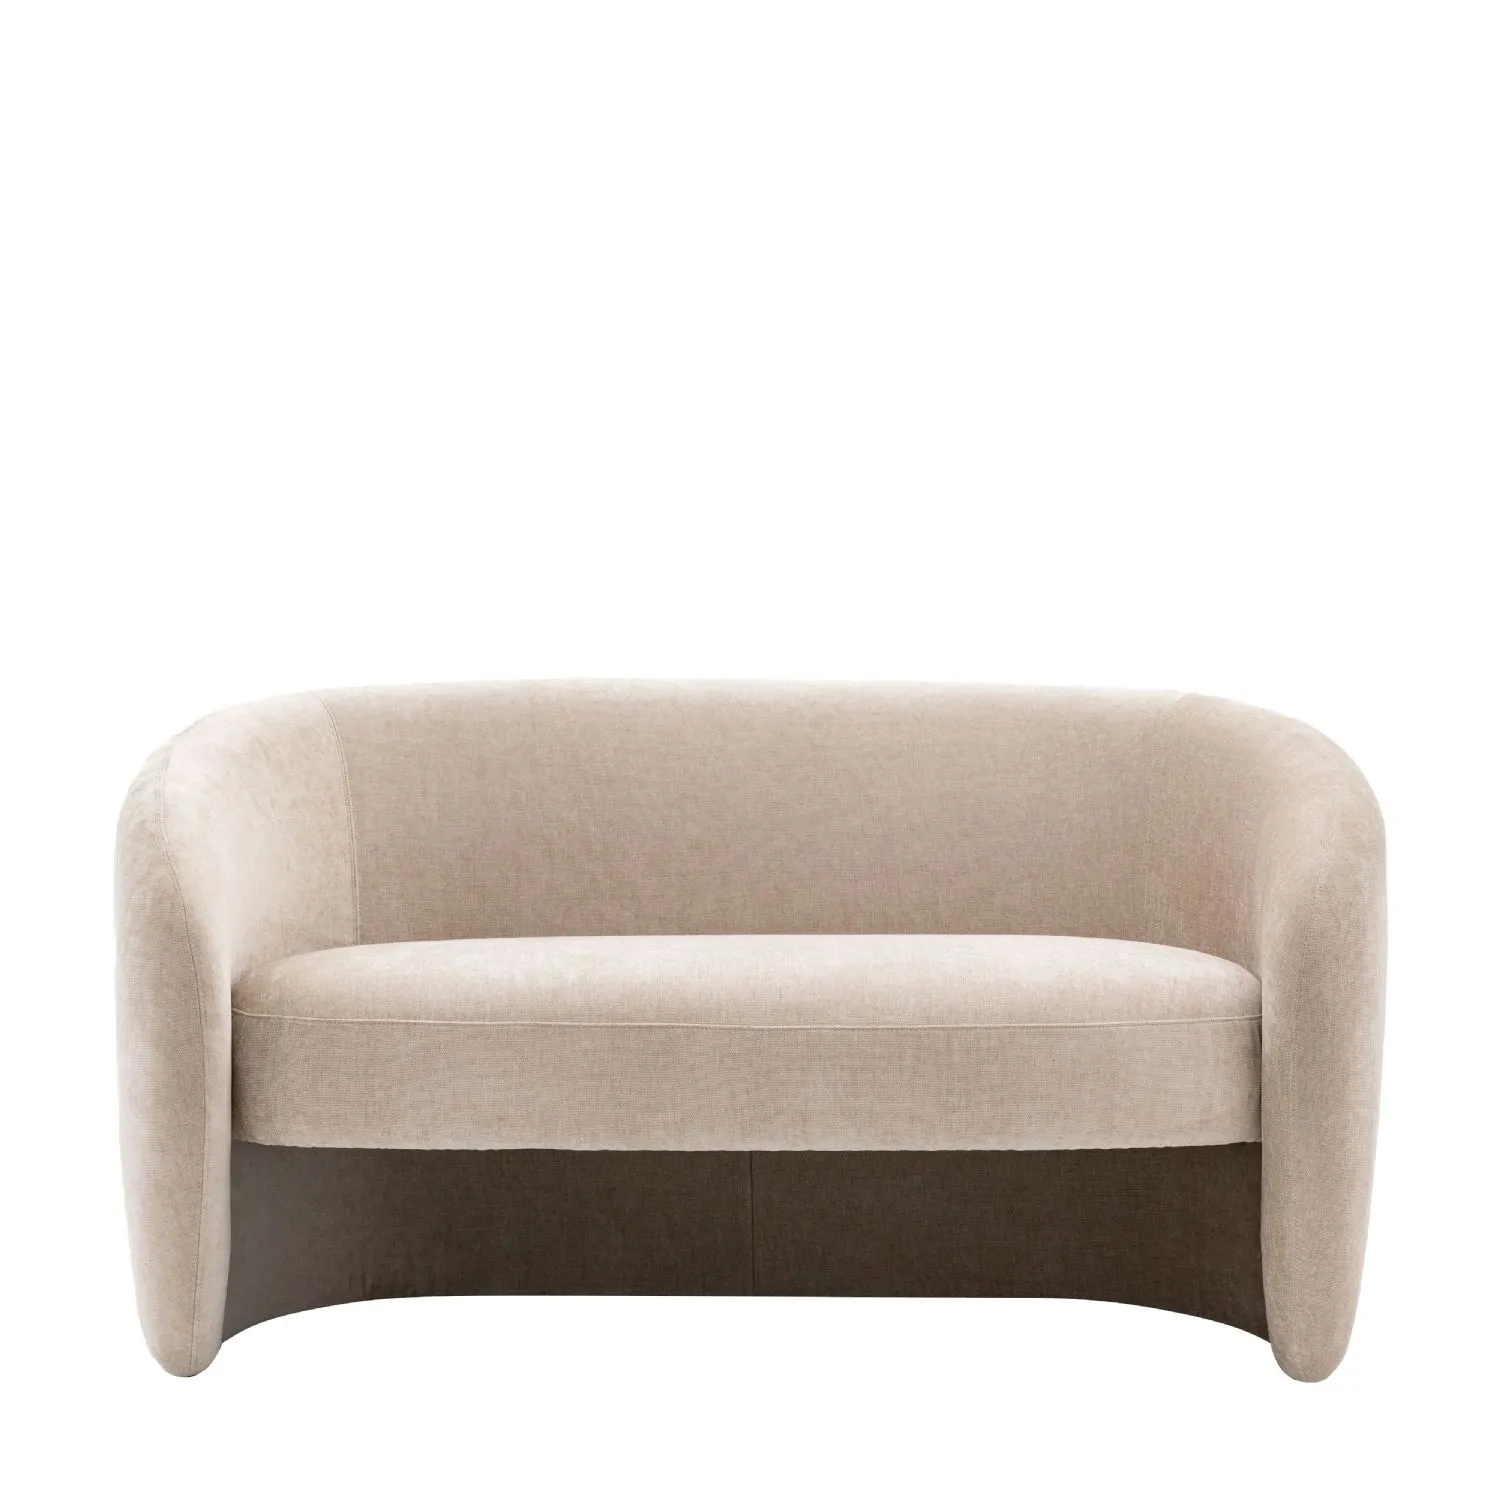 Retro Cream Fabric Curved Back 2 Seater Sofa